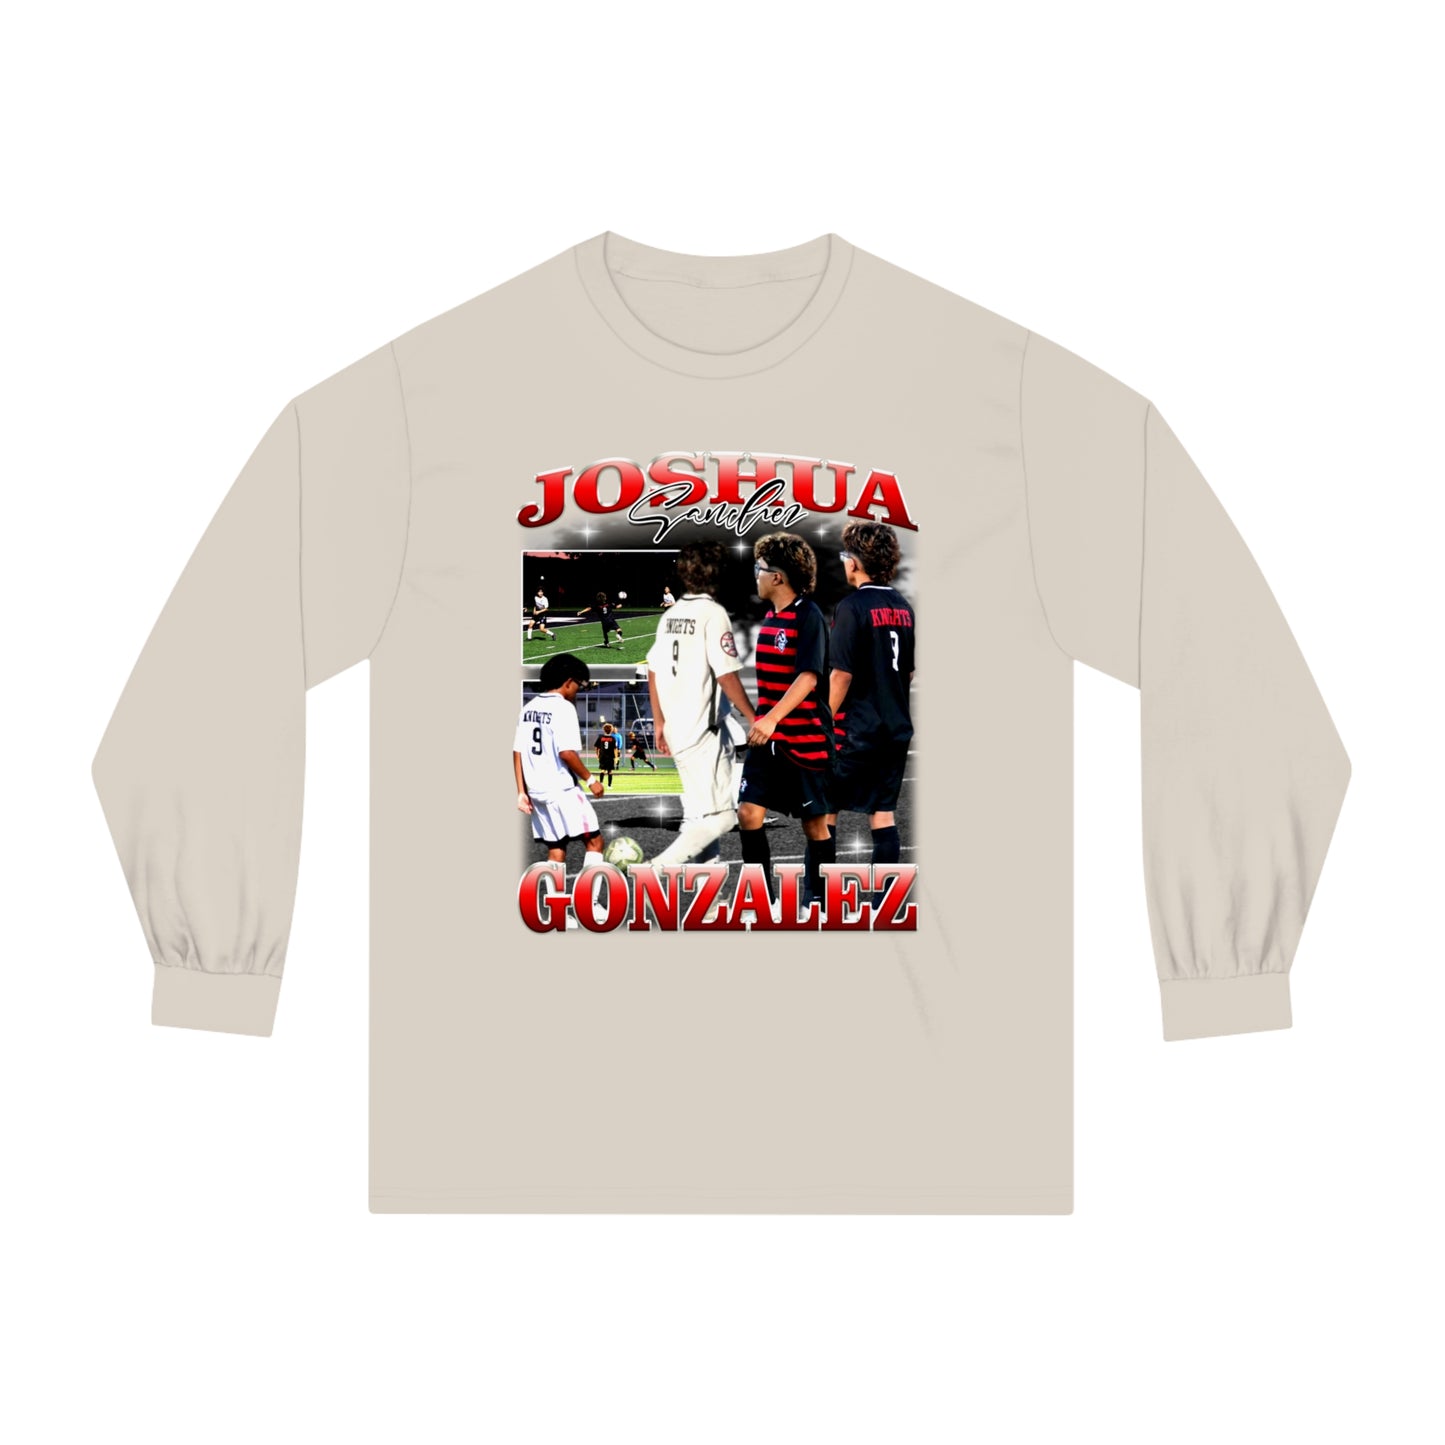 Joshua Sanchez Gonazalez Long Sleeve T-Shirt